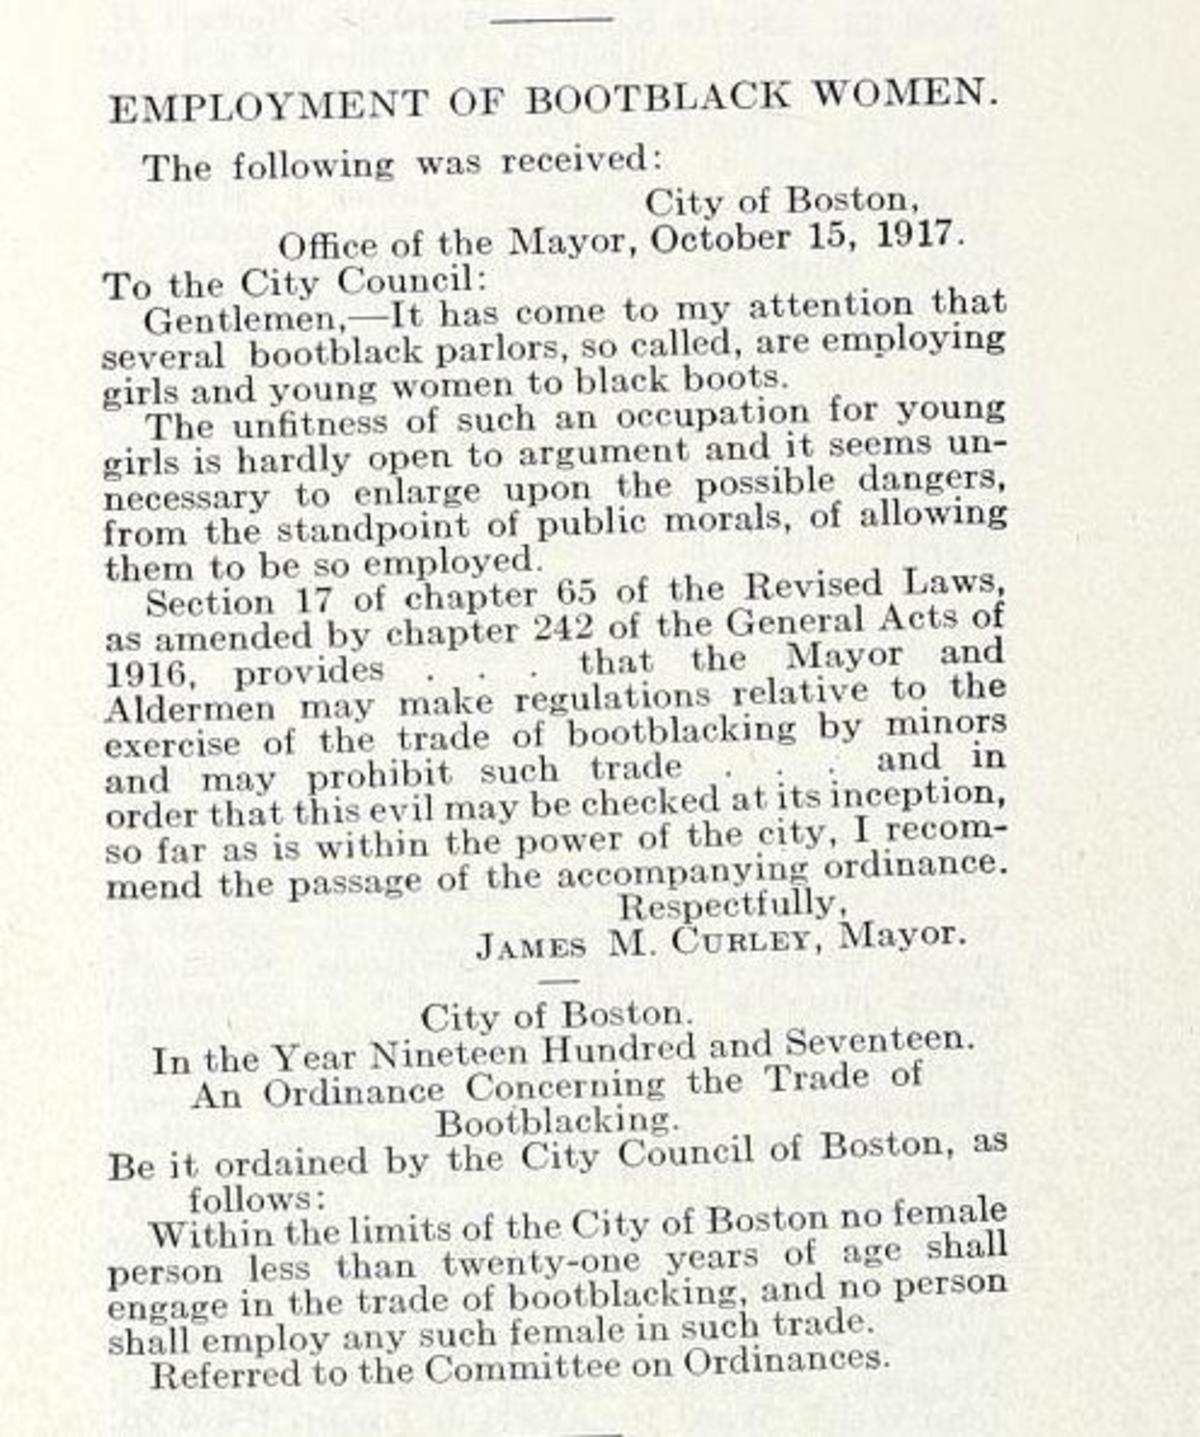 Ordinance regarding employment of BootBlack Women, October 15, 1917